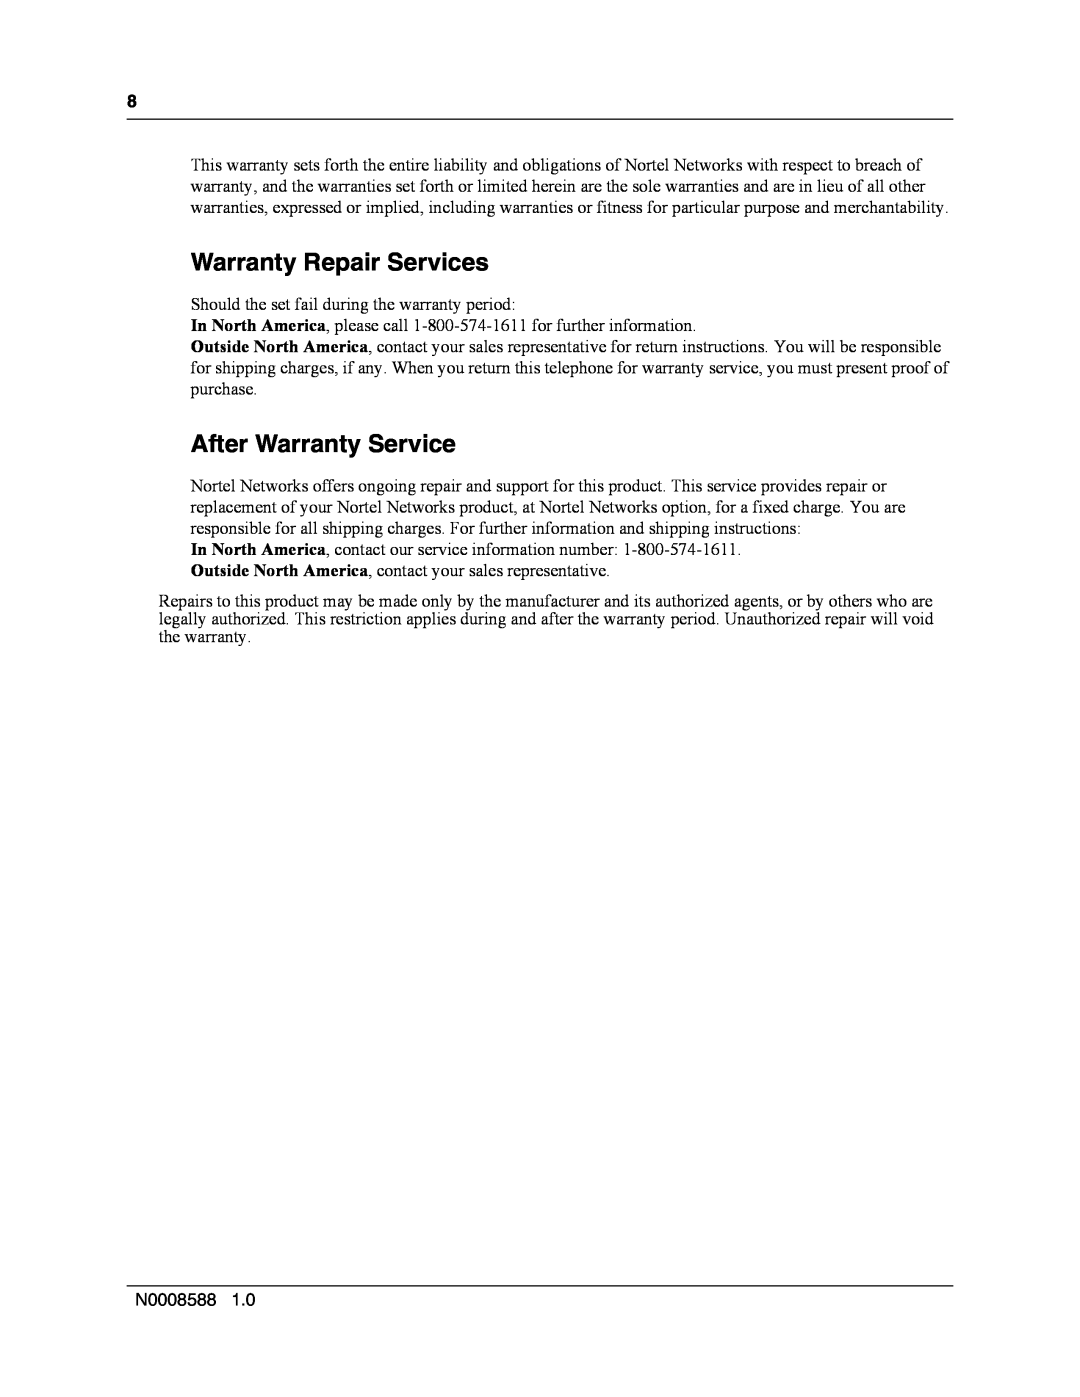 Nortel Networks MOG7xx, MOG6xx manual Warranty Repair Services, After Warranty Service 